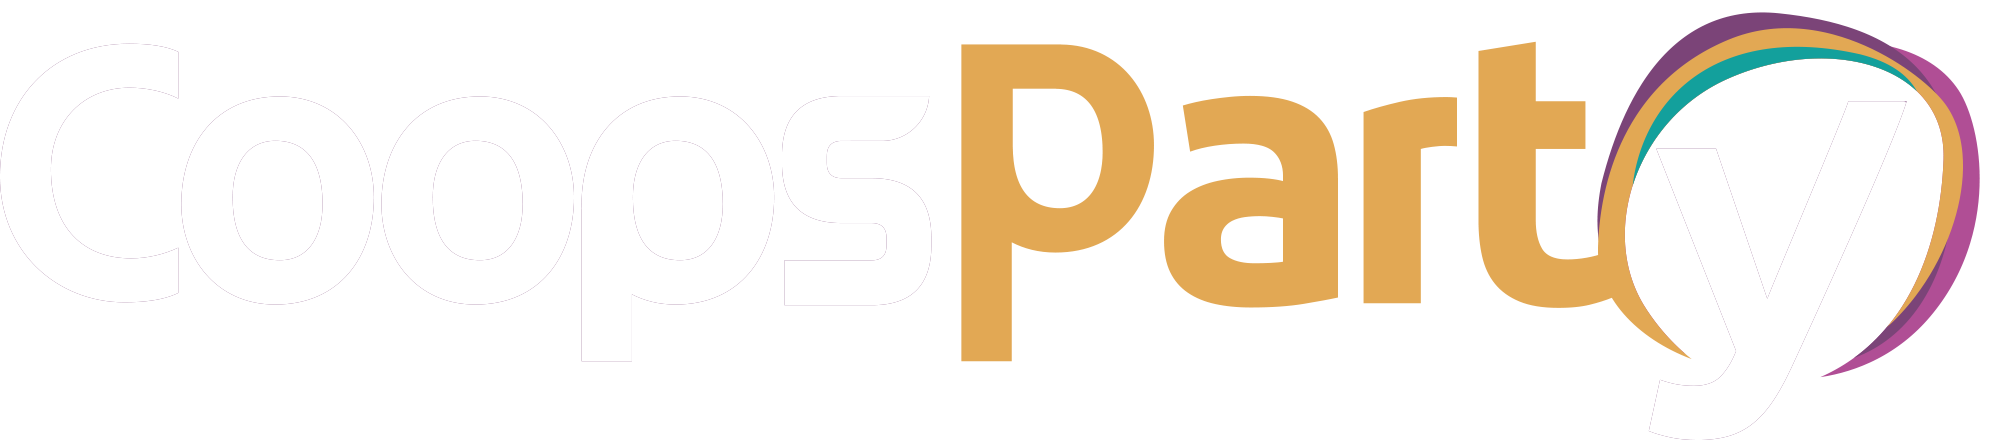 CoopParty_logotipo-BRANCO